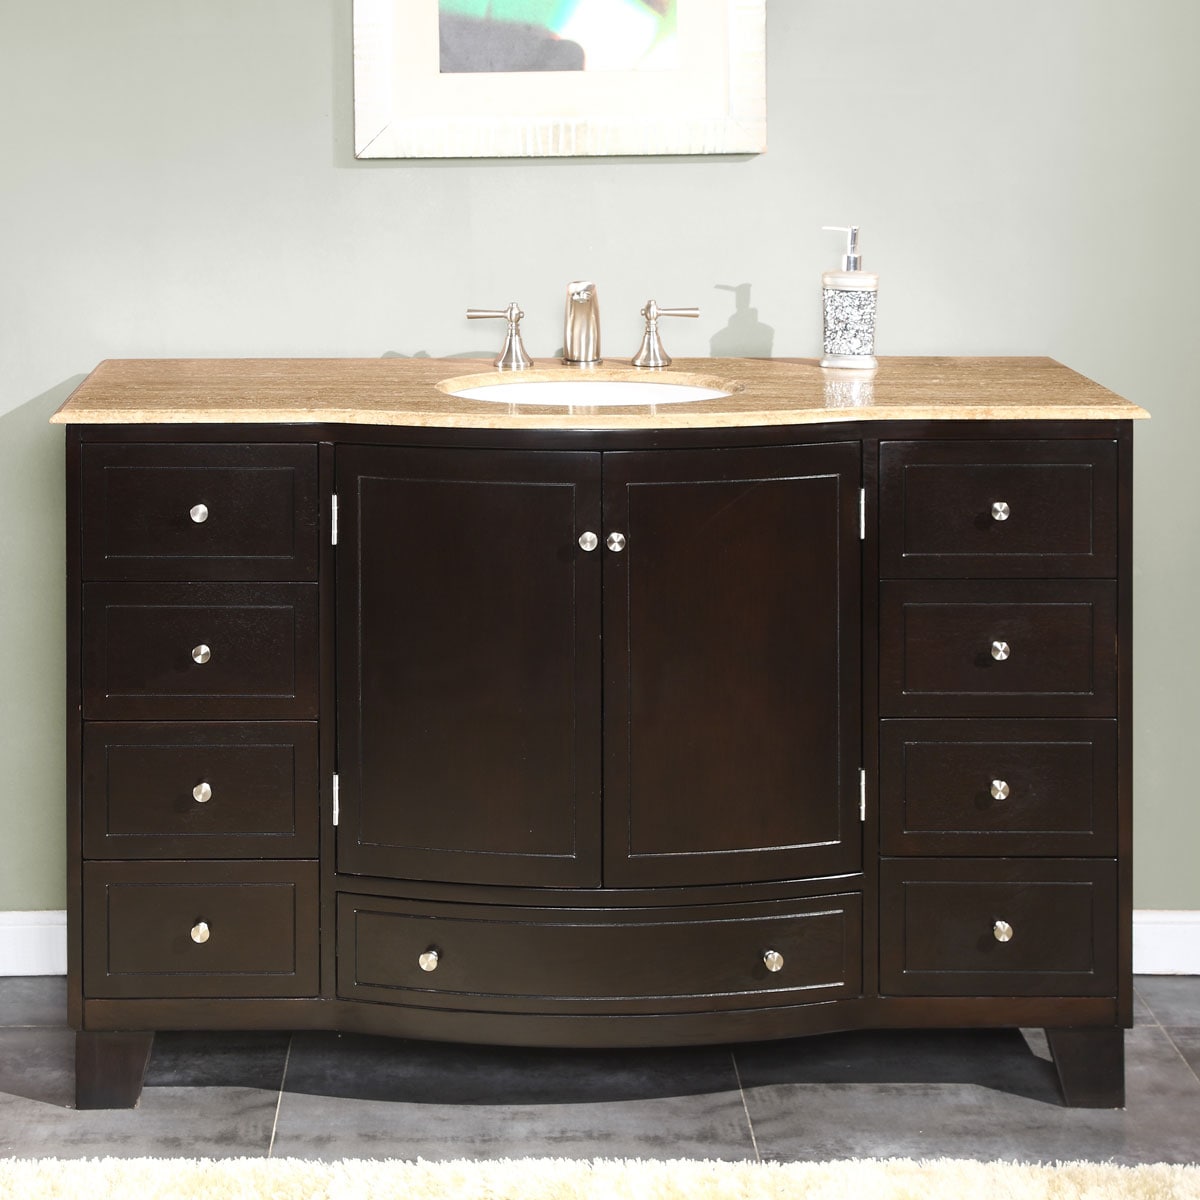 55-in Dark Espresso Undermount Single Sink Bathroom Vanity with Travertine Top in Brown | - Silkroad Exclusive HYP-0703-T-UWC-55